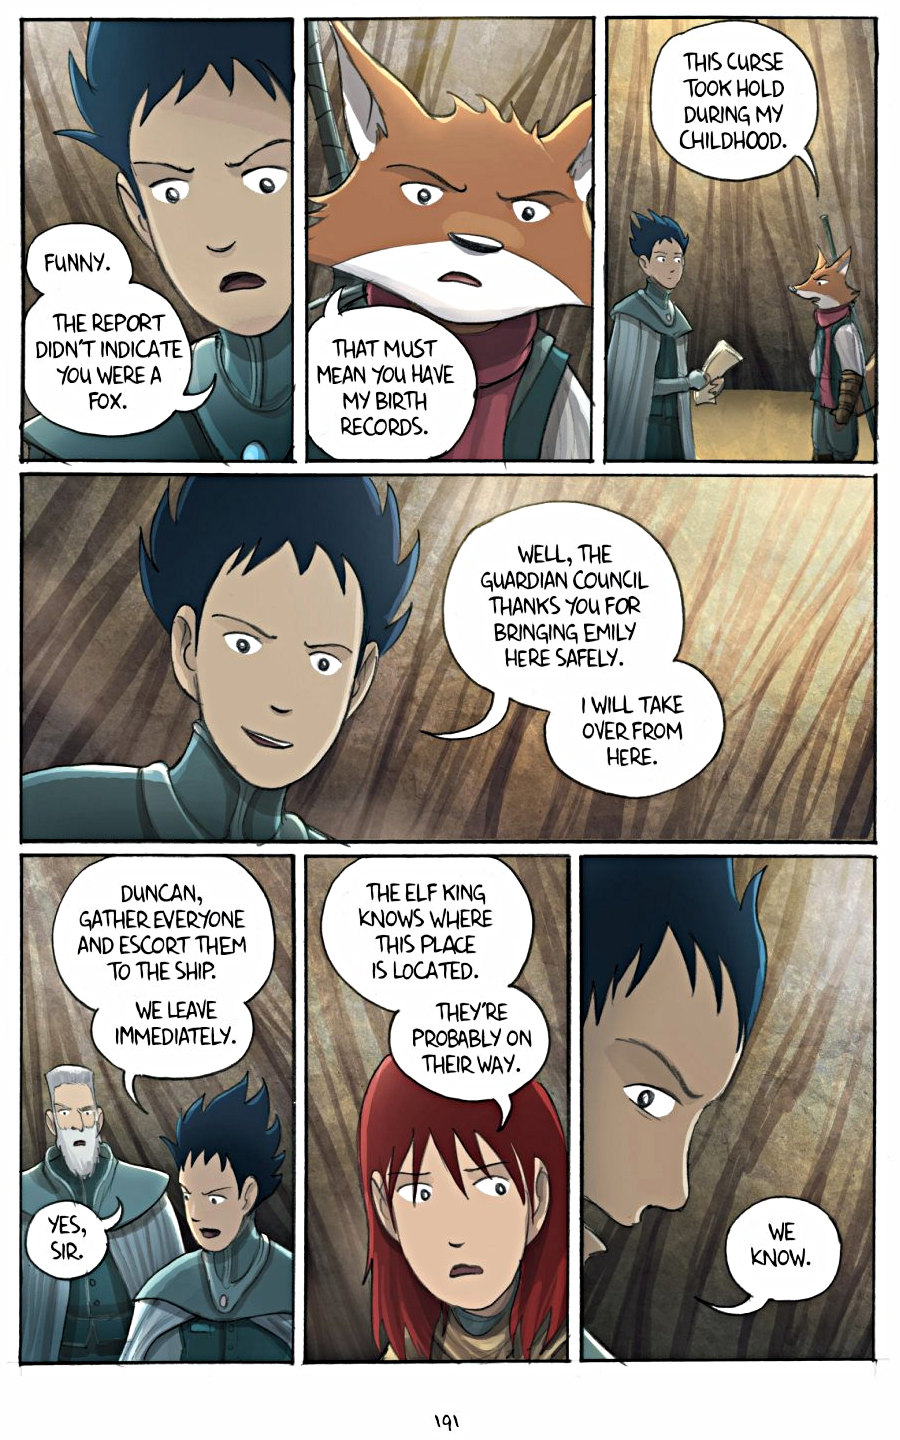 page 191 of amulet 3 cloud searchers graphic novel by kazu kibuishi